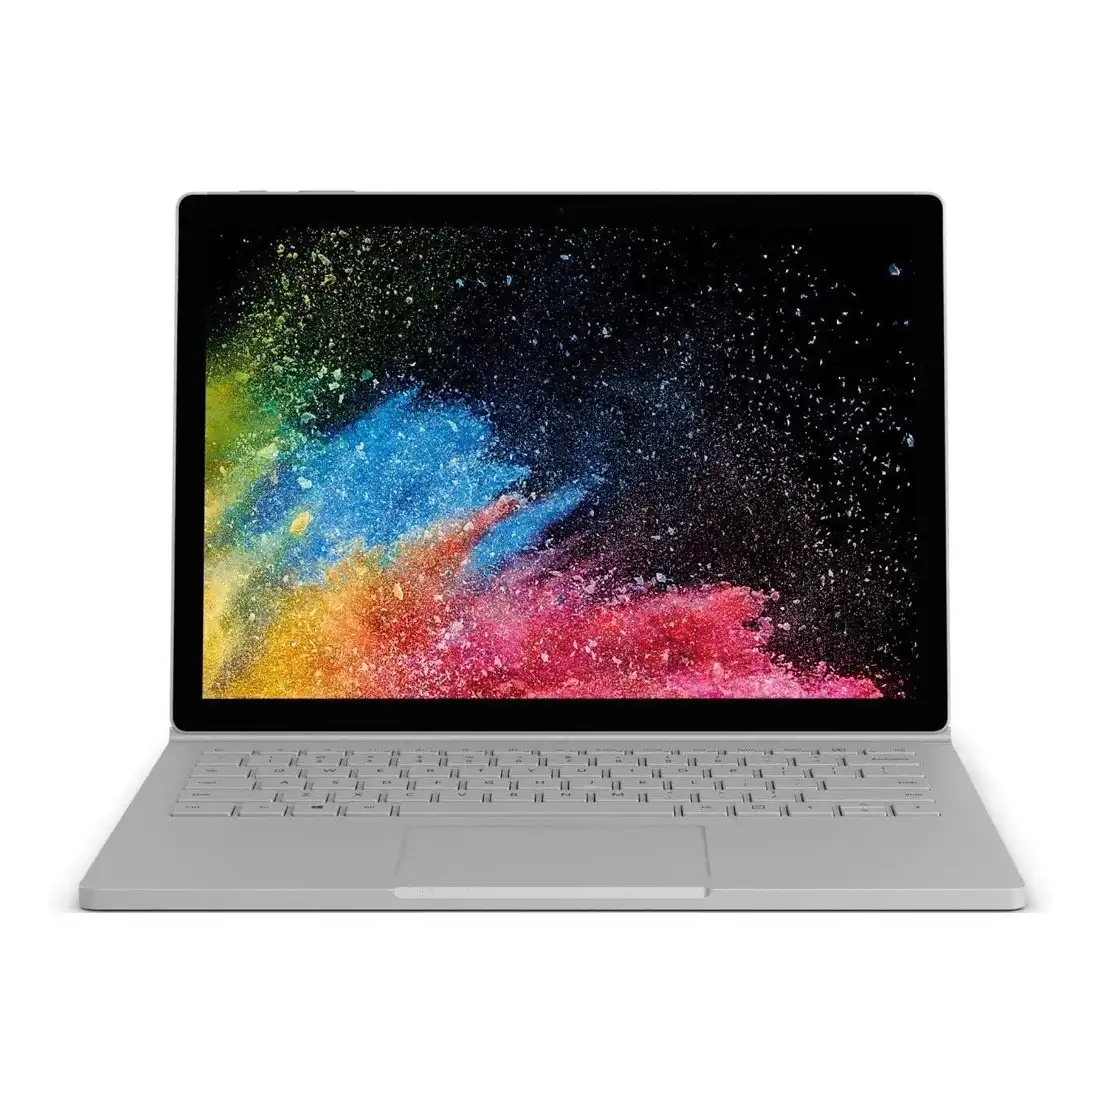 Microsoft Surface Book 2 (13", i5-7300U, 256GB/8GB, JLY-00008) Platinum [Refurbished] - Excellent